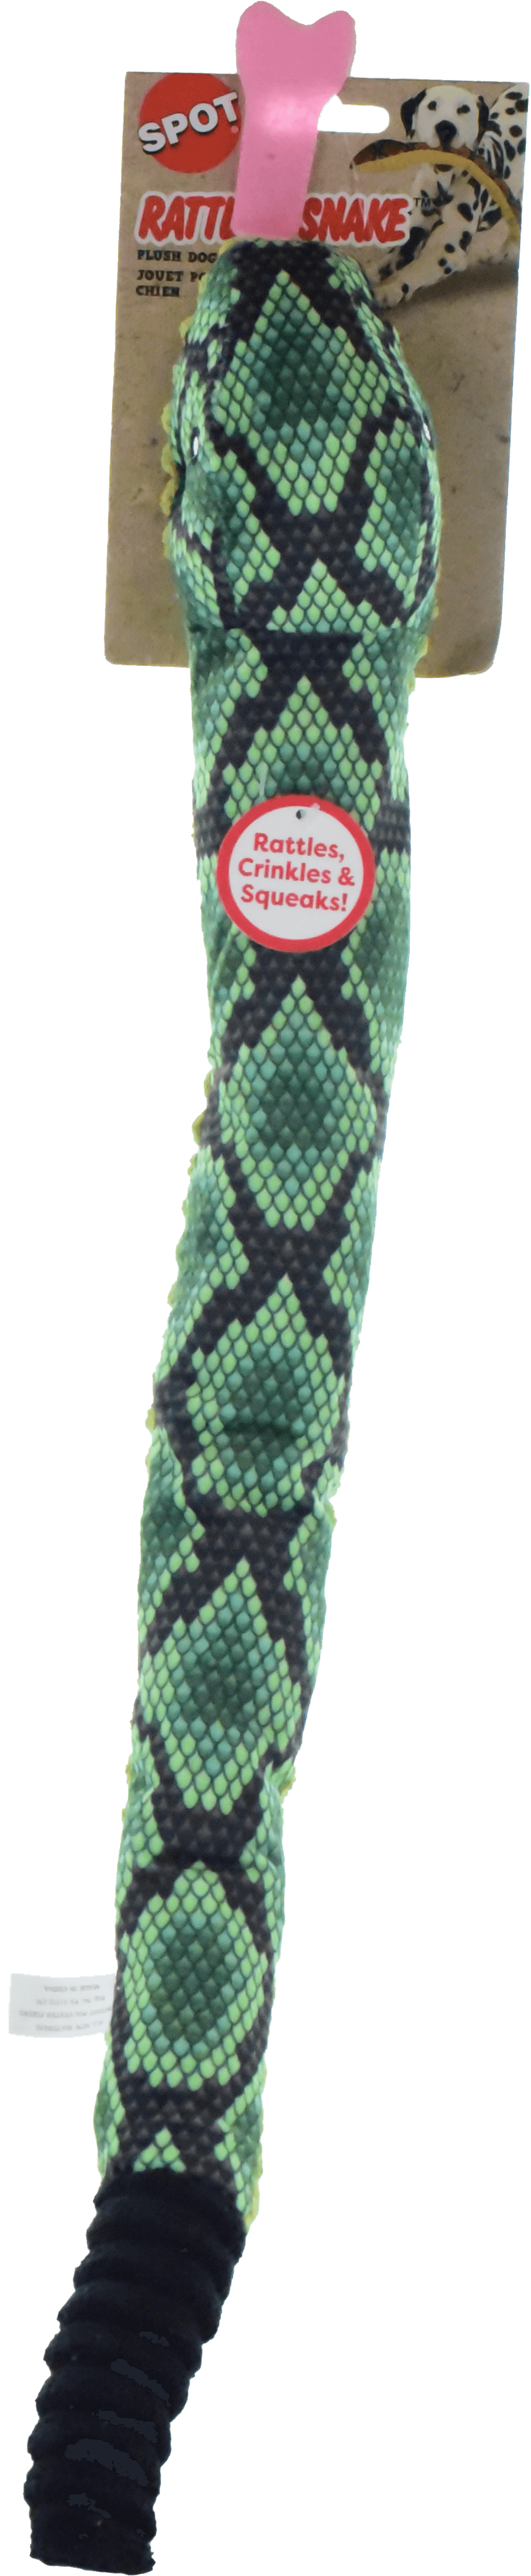 Rattler snake in assorted patterns